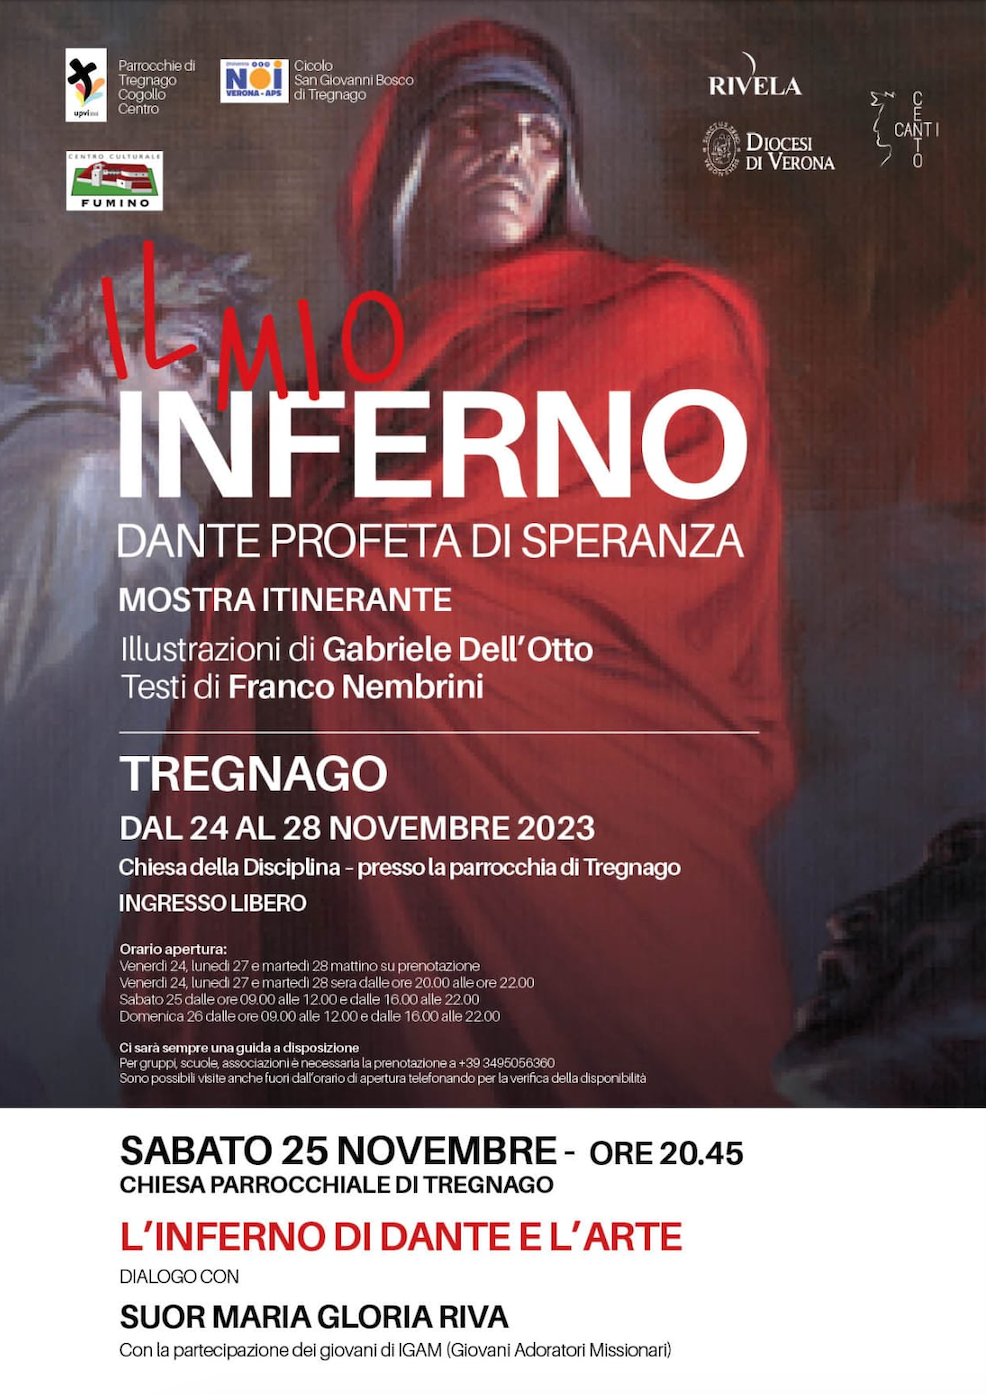 Featured image for “Tregnago (Vr): Dante profeta di speranza”